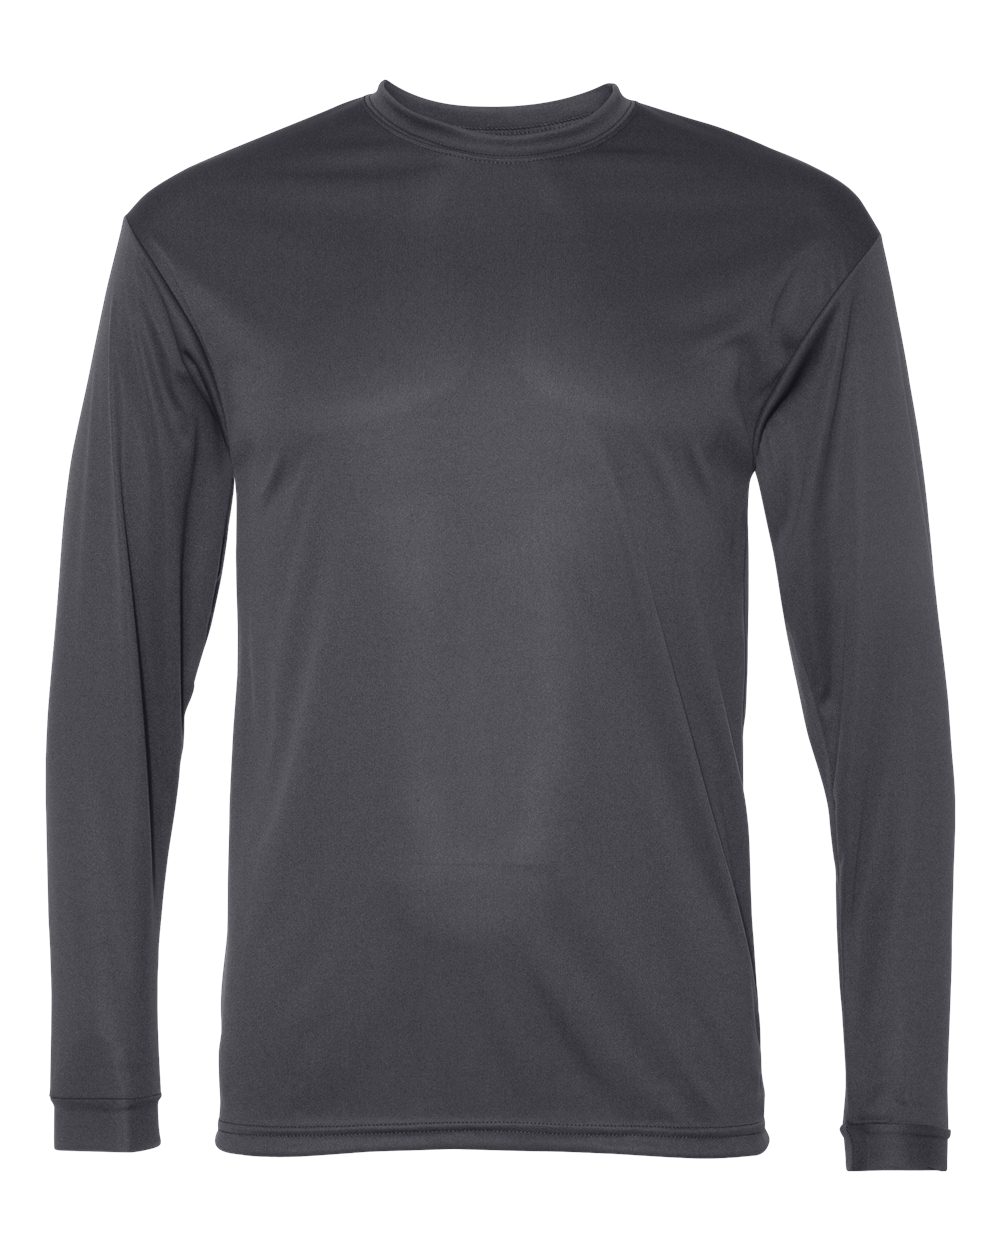 https://images.shirtspace.com/fullsize/TL%2FKHI90AHCnkOfwwwZ%2FLg%3D%3D/286053/5259-c2-sport-5104-adult-performance-long-sleeve-tee-front-graphite.jpg